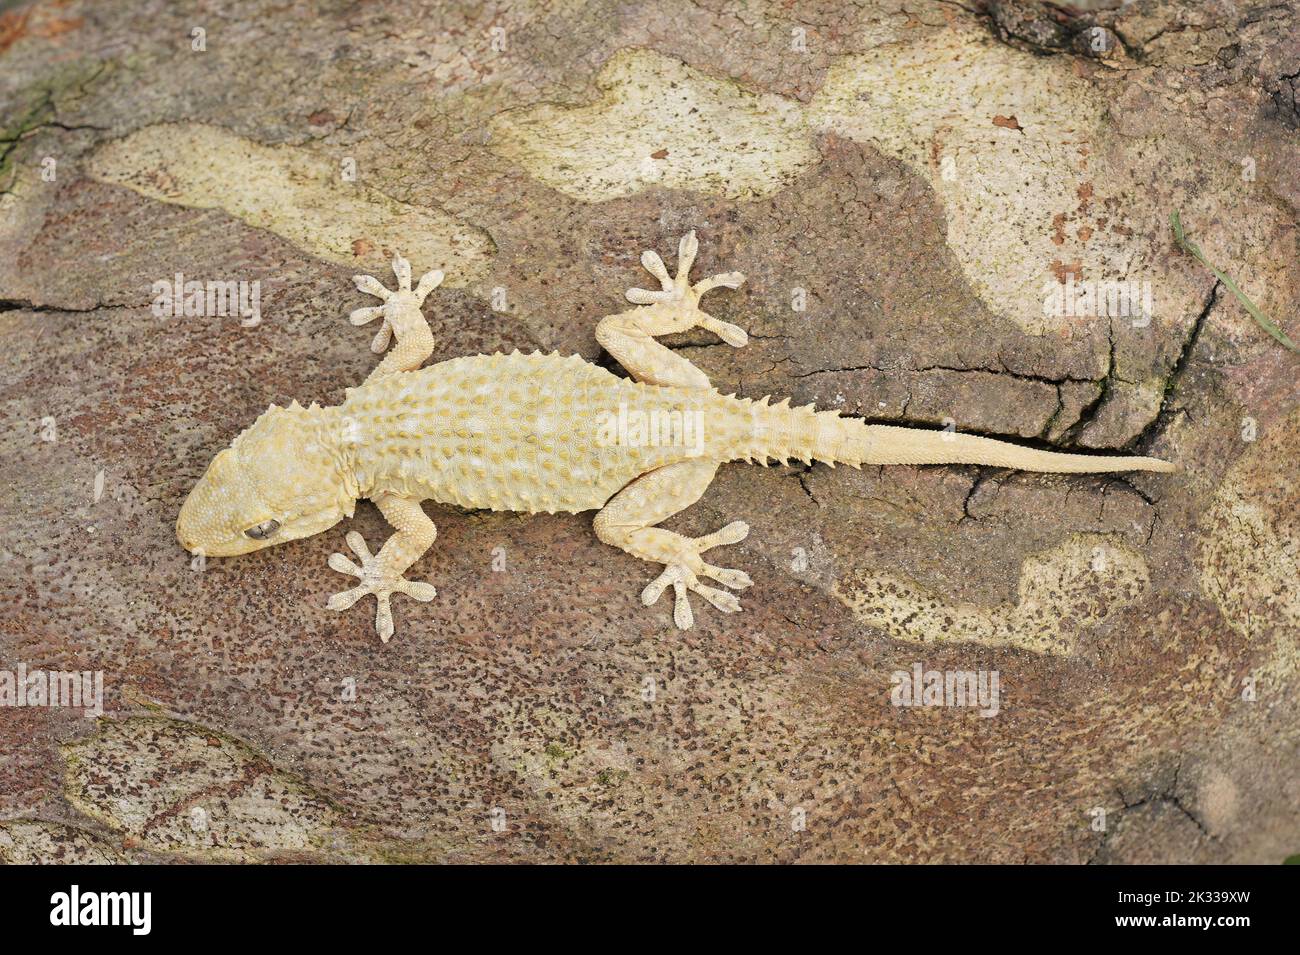 Detailed Closeup on a light colored adult European Common wall gecko, Tarentola mauritanica Stock Photo